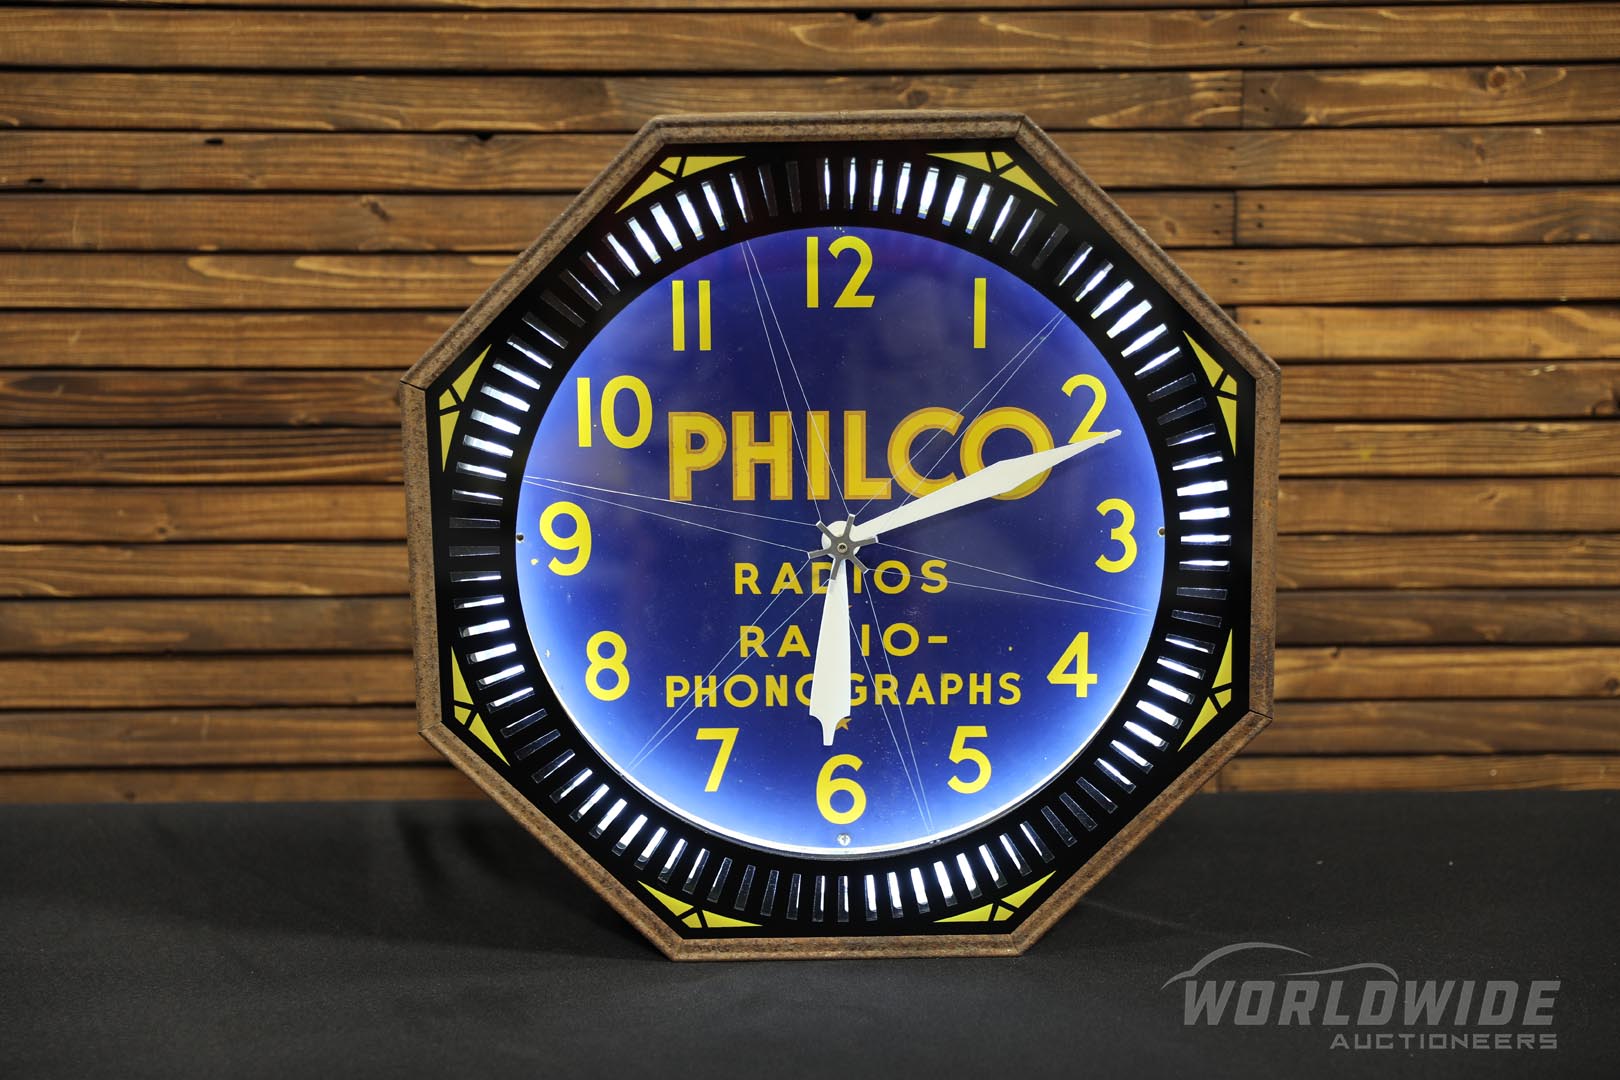  Philco Radios and Radio-Phonog raphs Octagon Neon Clock 